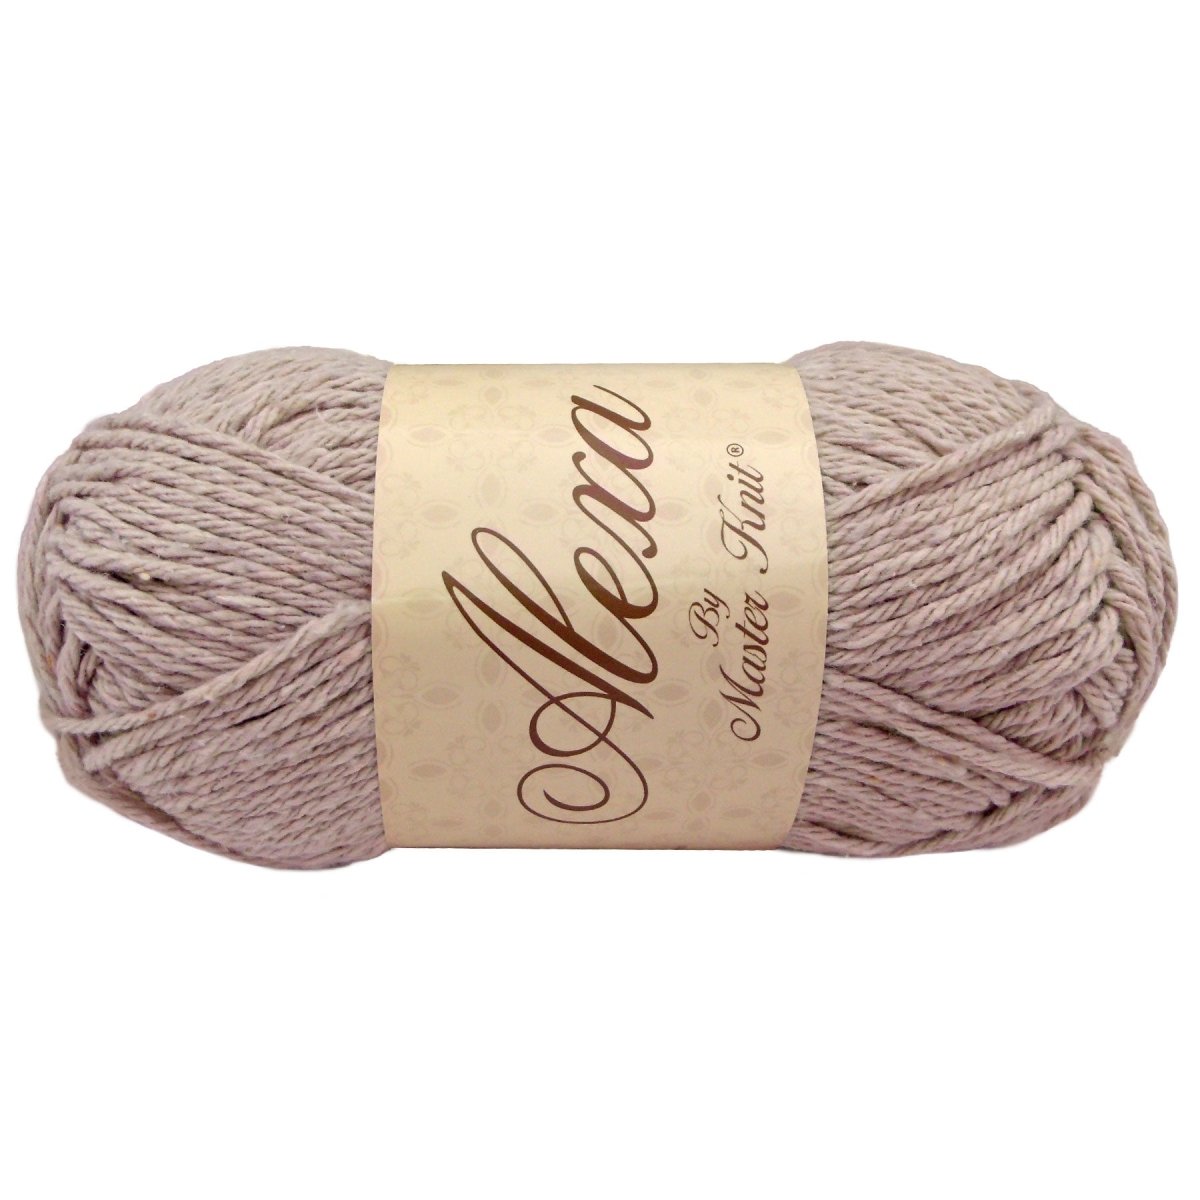 ALEXA - Crochetstores9340-349